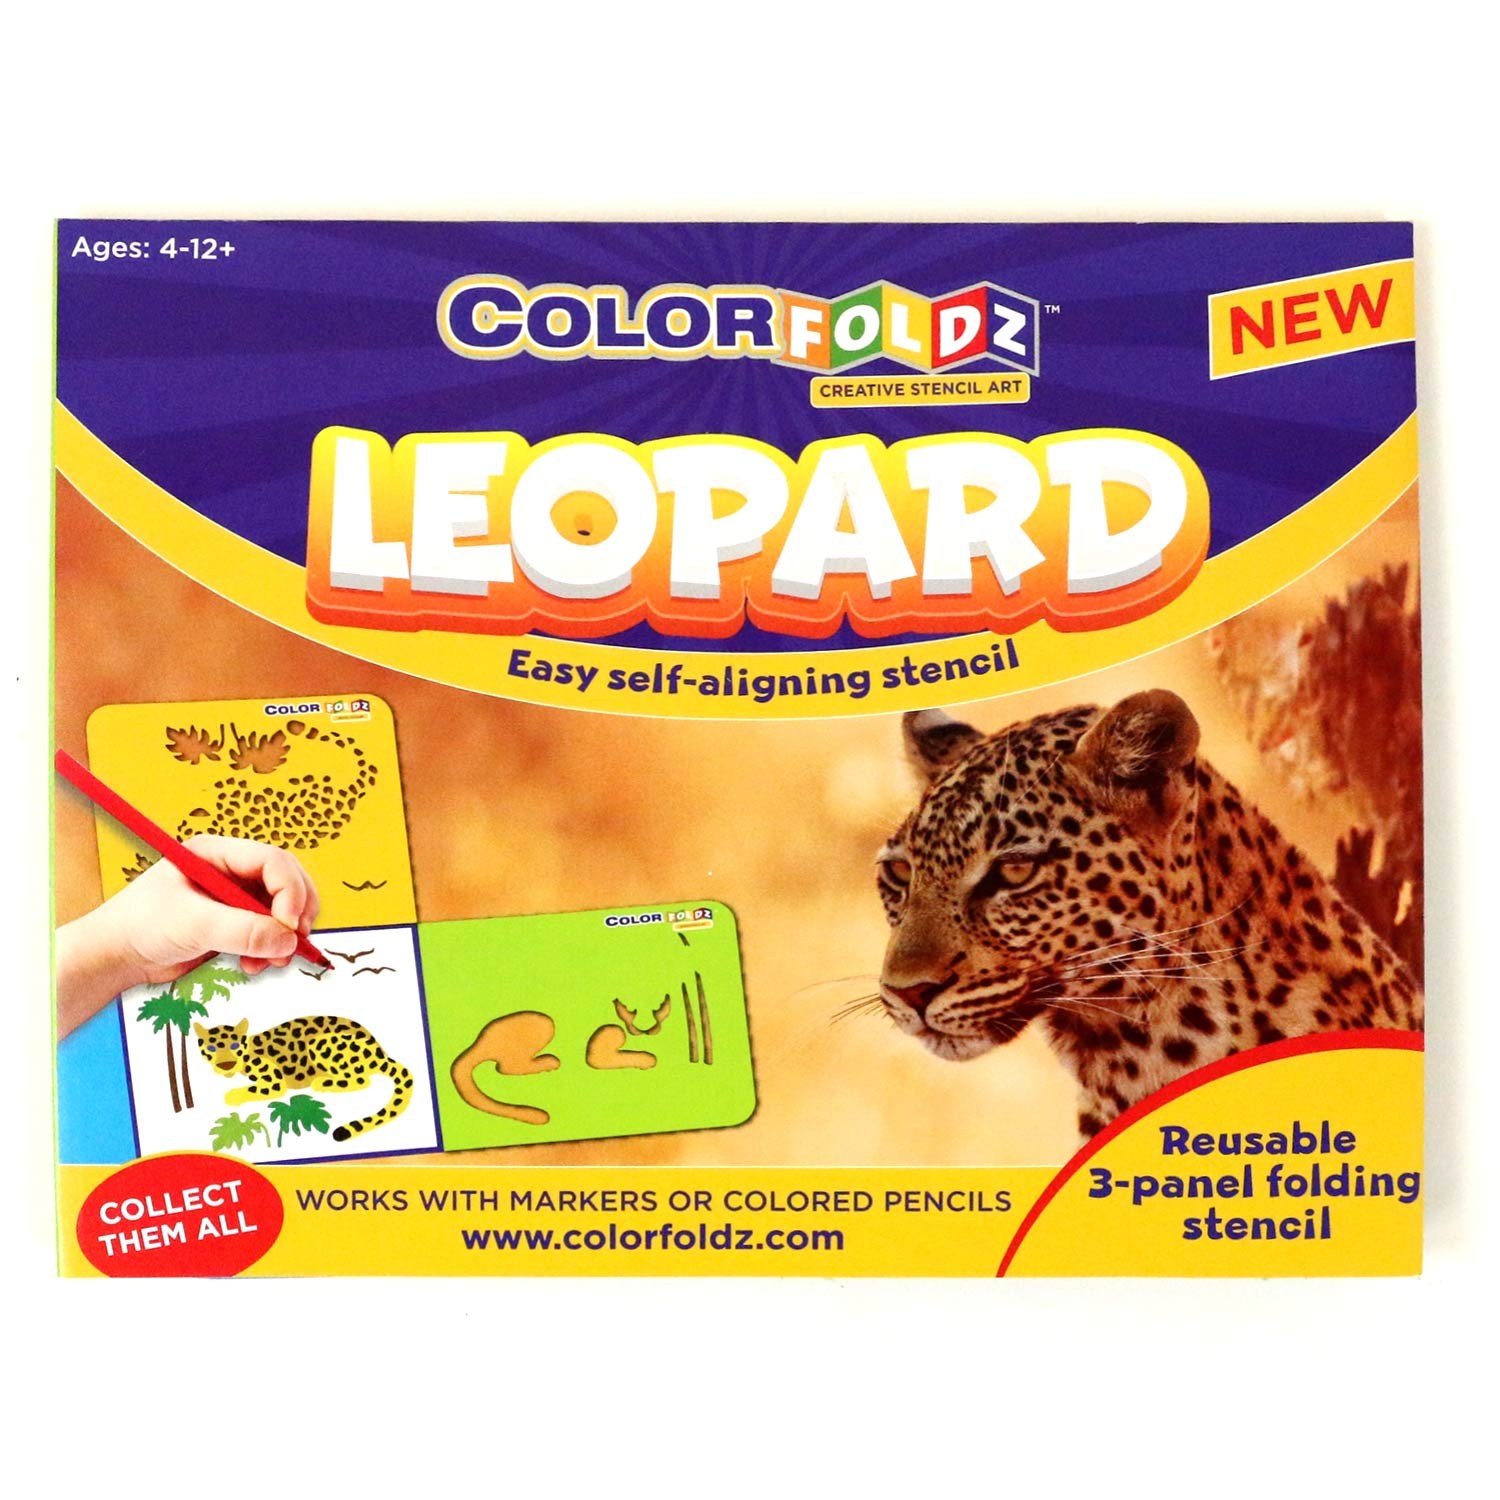 Leopard ColorFoldz Self-Aligning Stencil